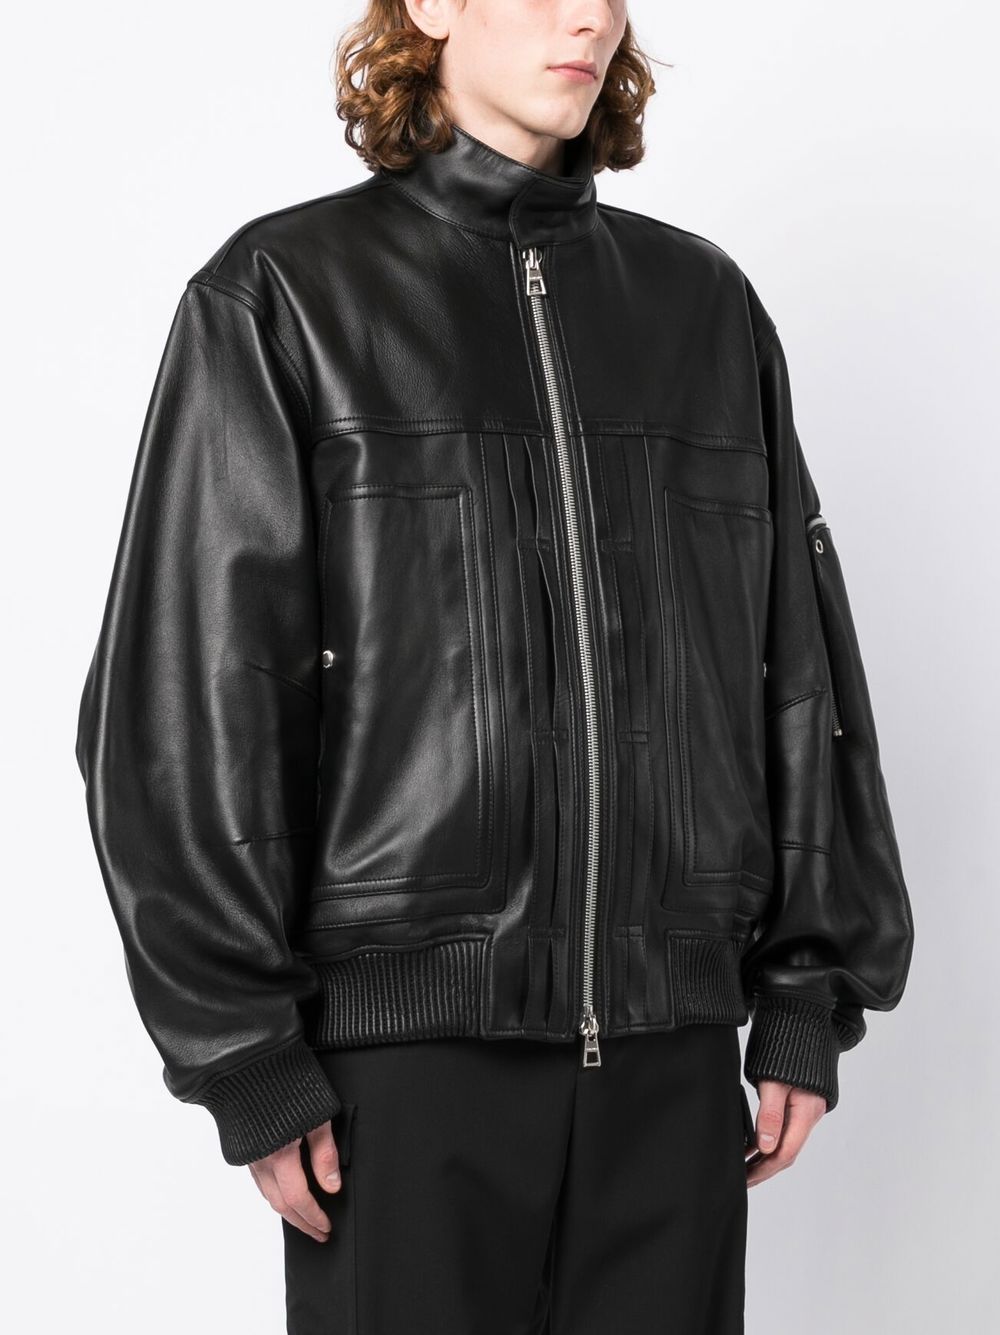 Harrington leather jacket